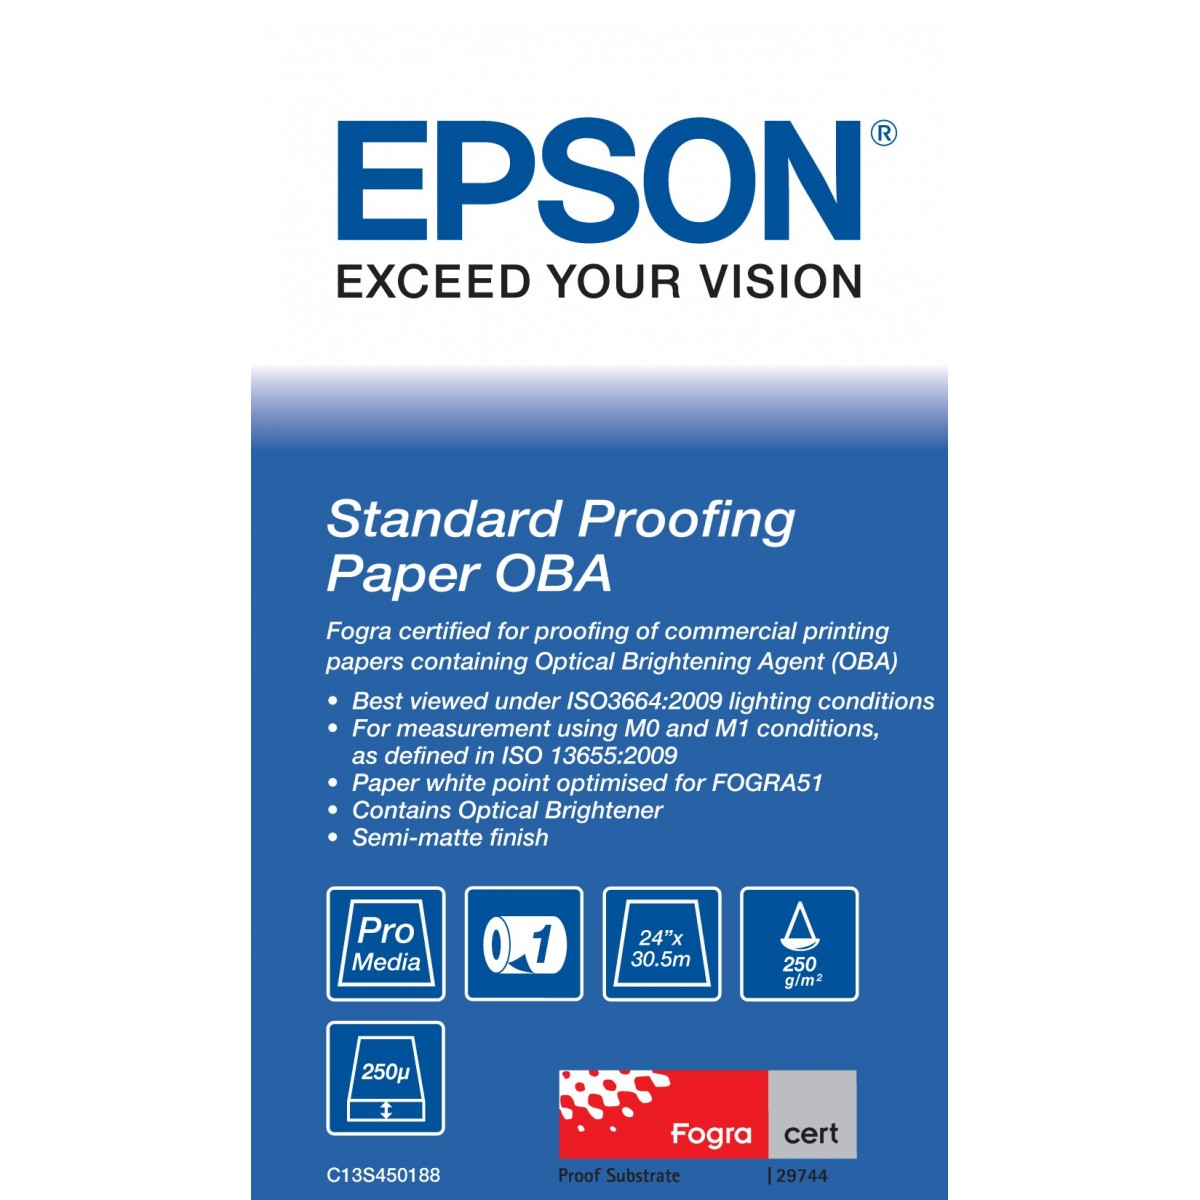 Epson Standard Proofing Paper OBA 24 x 30.5 m - 30.5 m - 61 cm (24) - Semi-matte - 250 g/m² - 250 µm - Germany